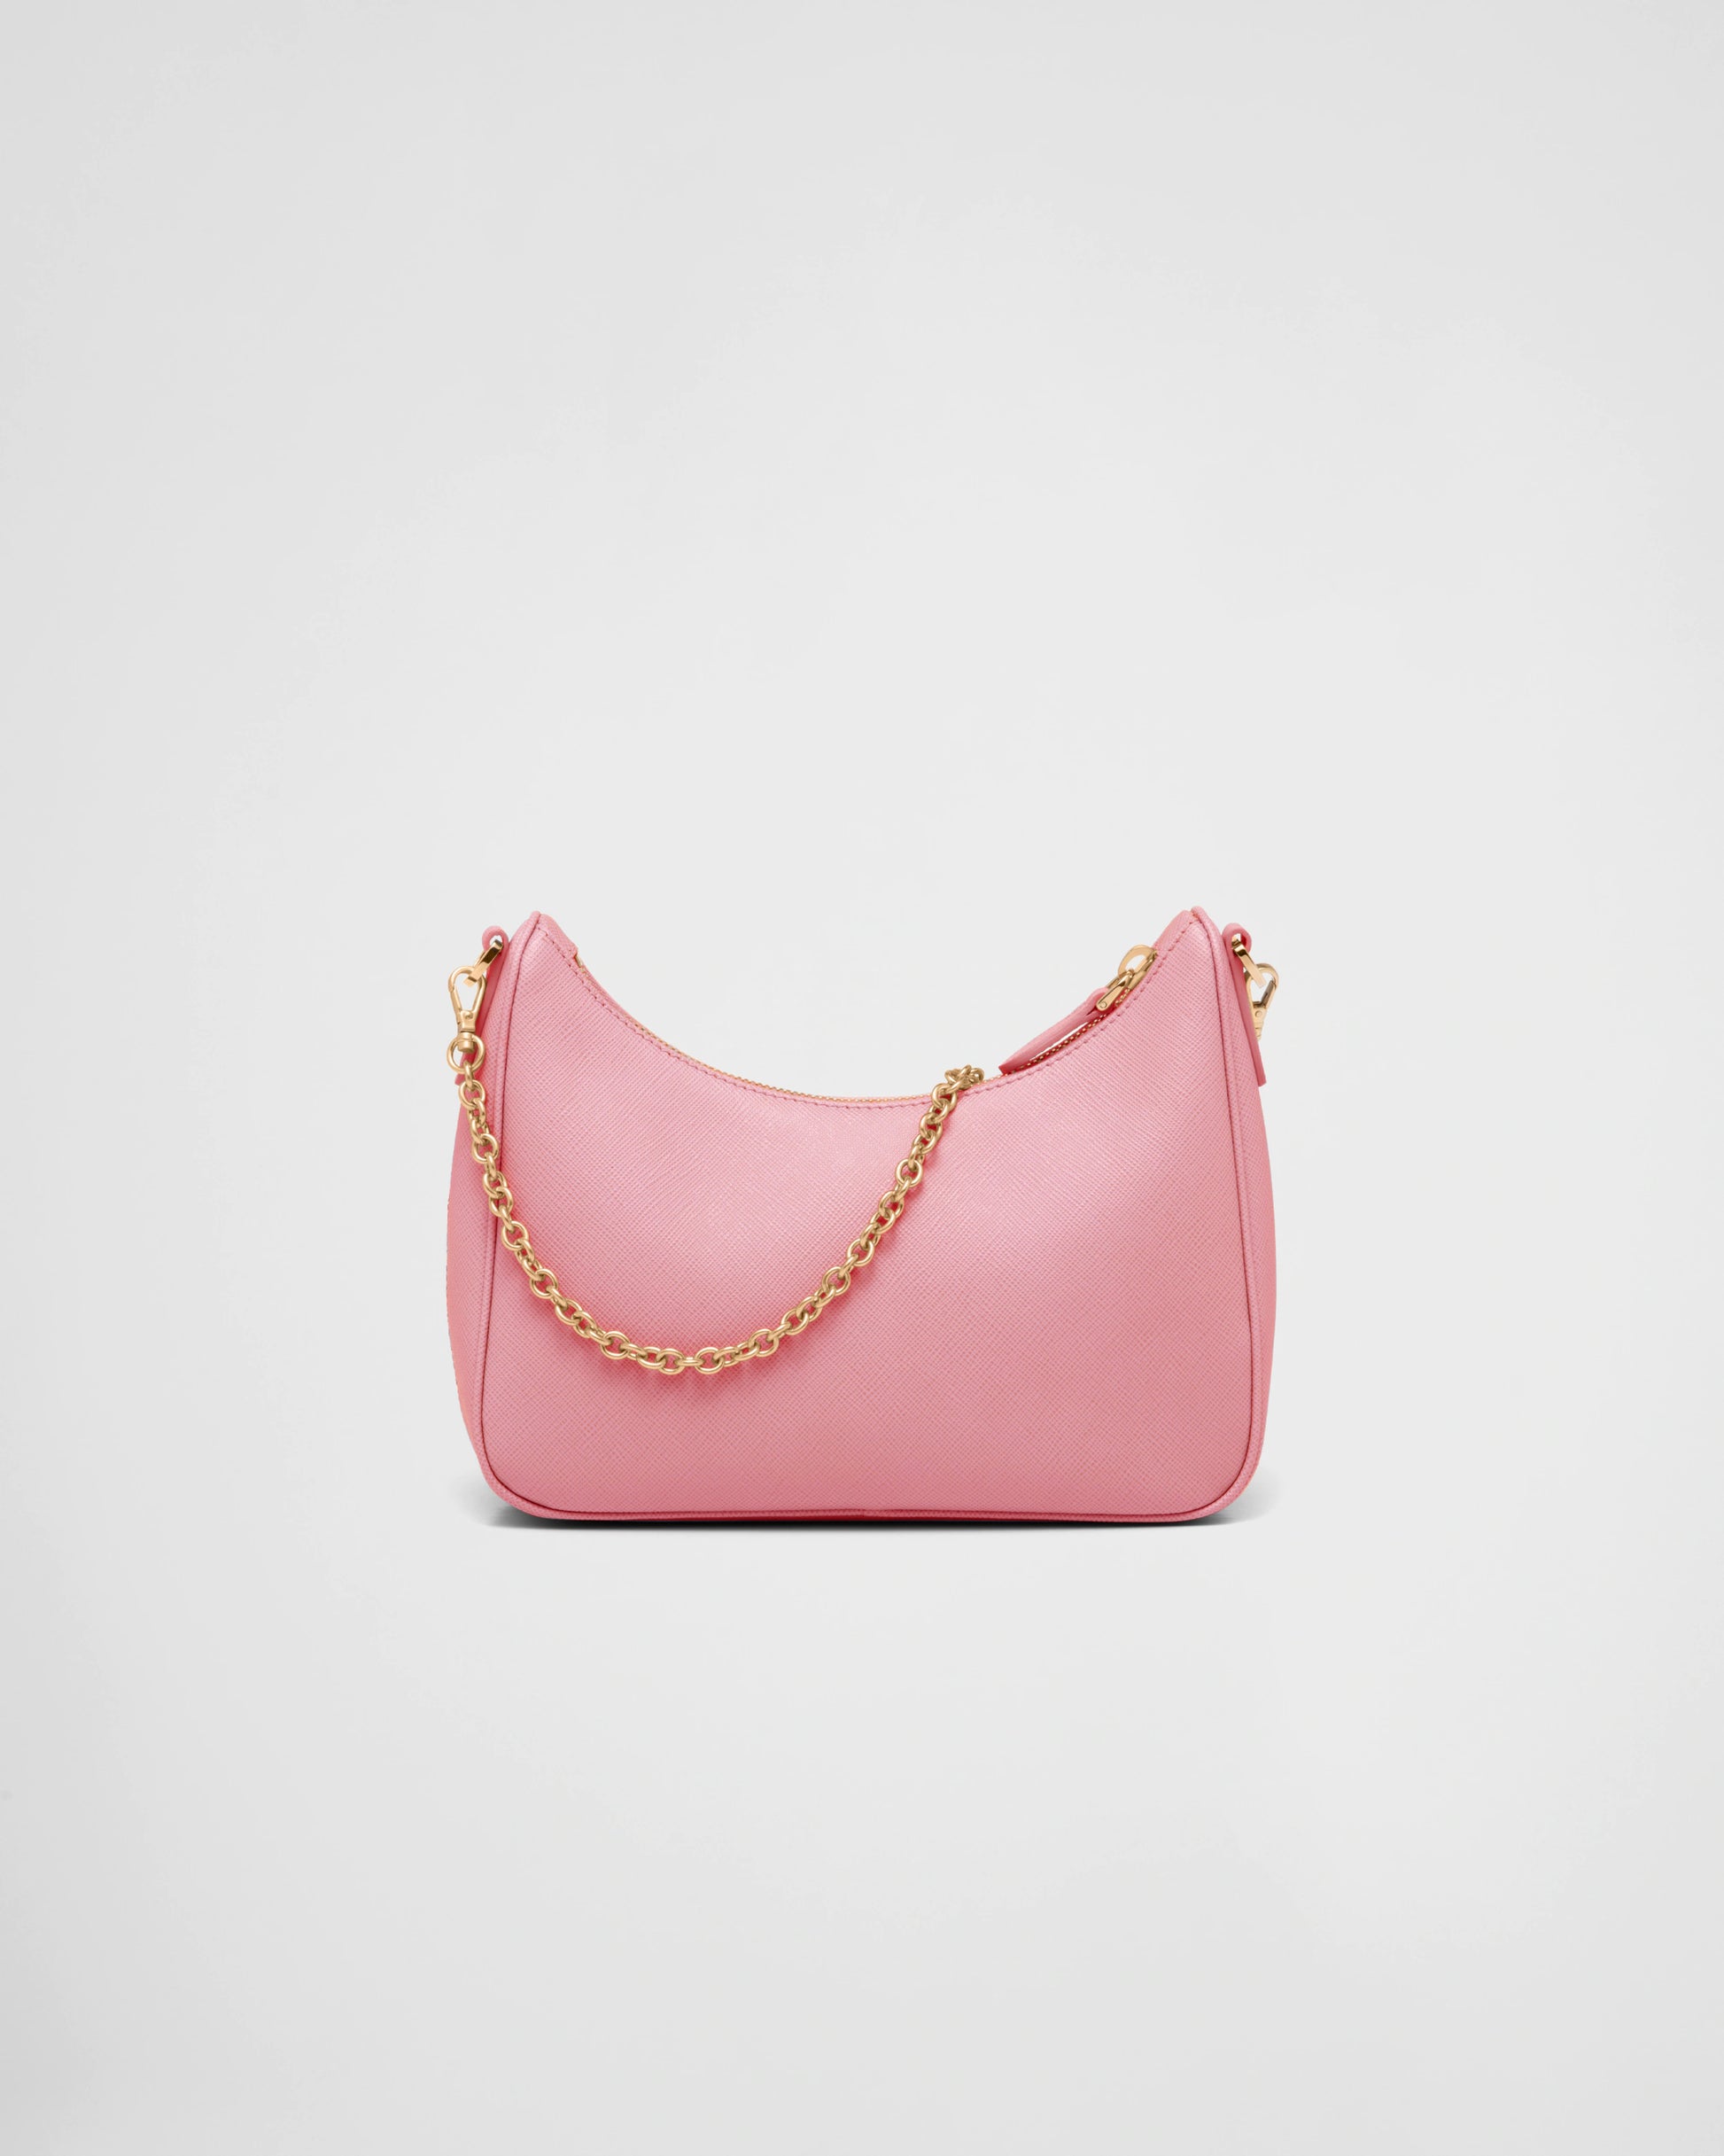 prada pink leather bag